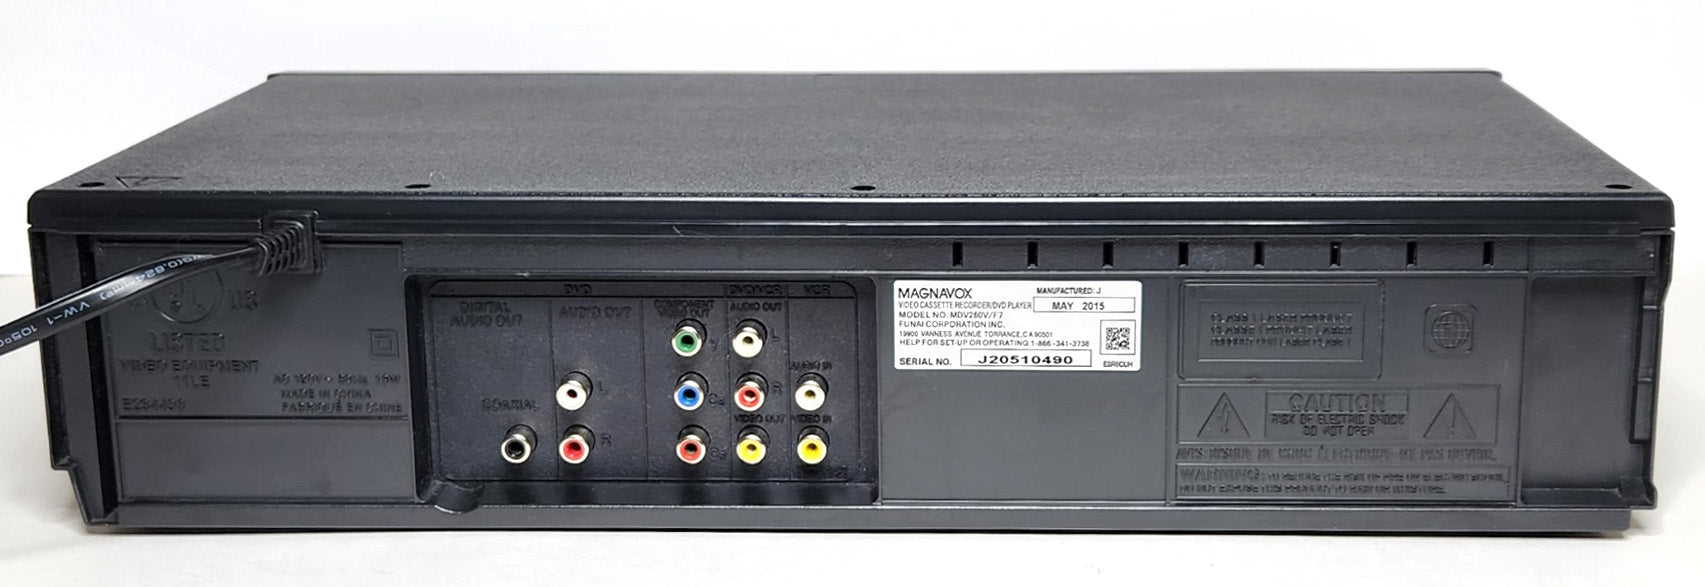 Magnavox MDV260V VCR/DVD Player Combo - Back